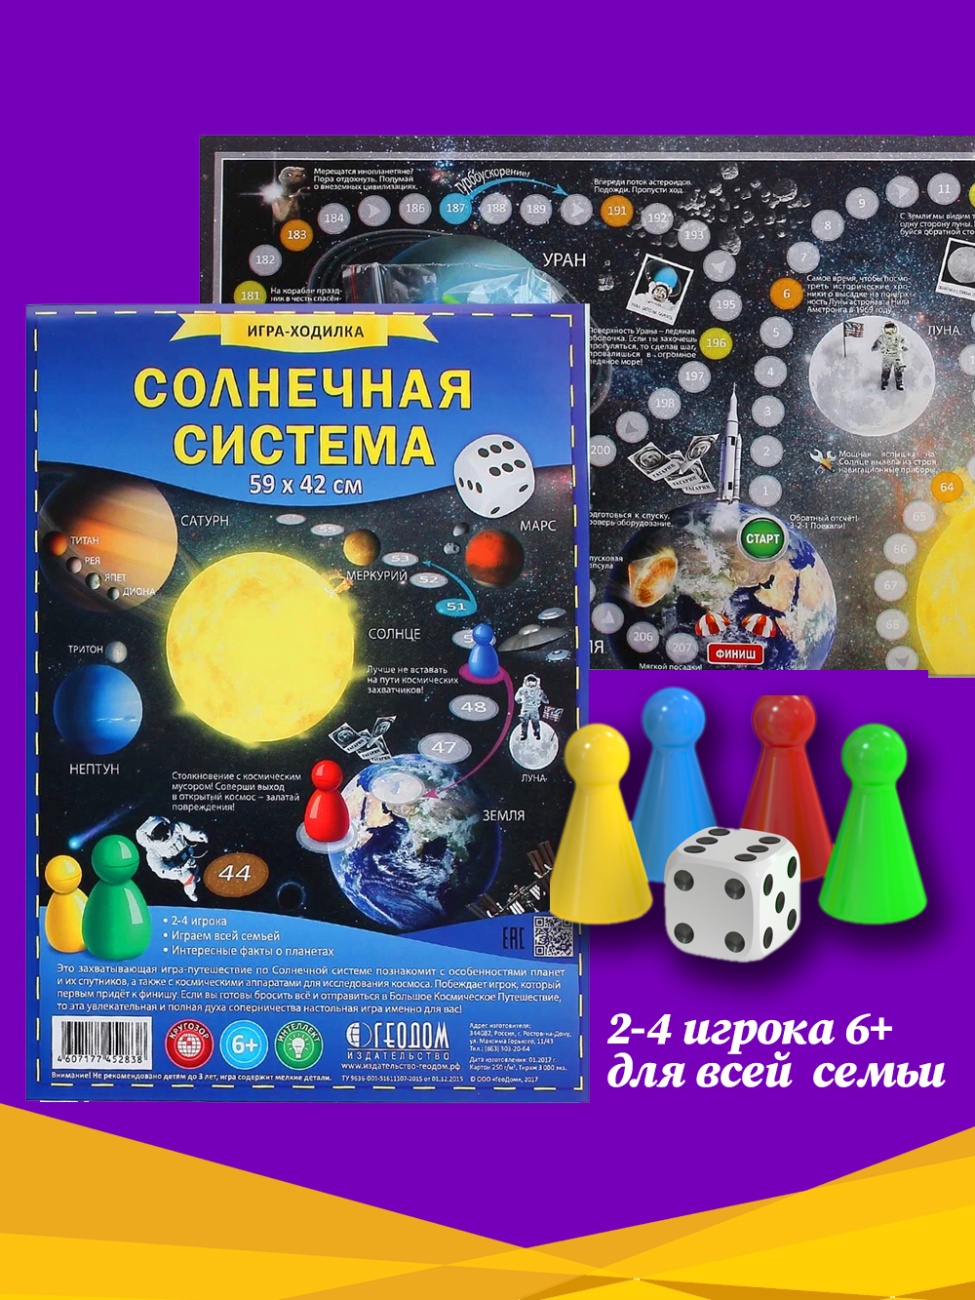 Игра-ходилка с фишками "Солнечная система" Геодом 52838